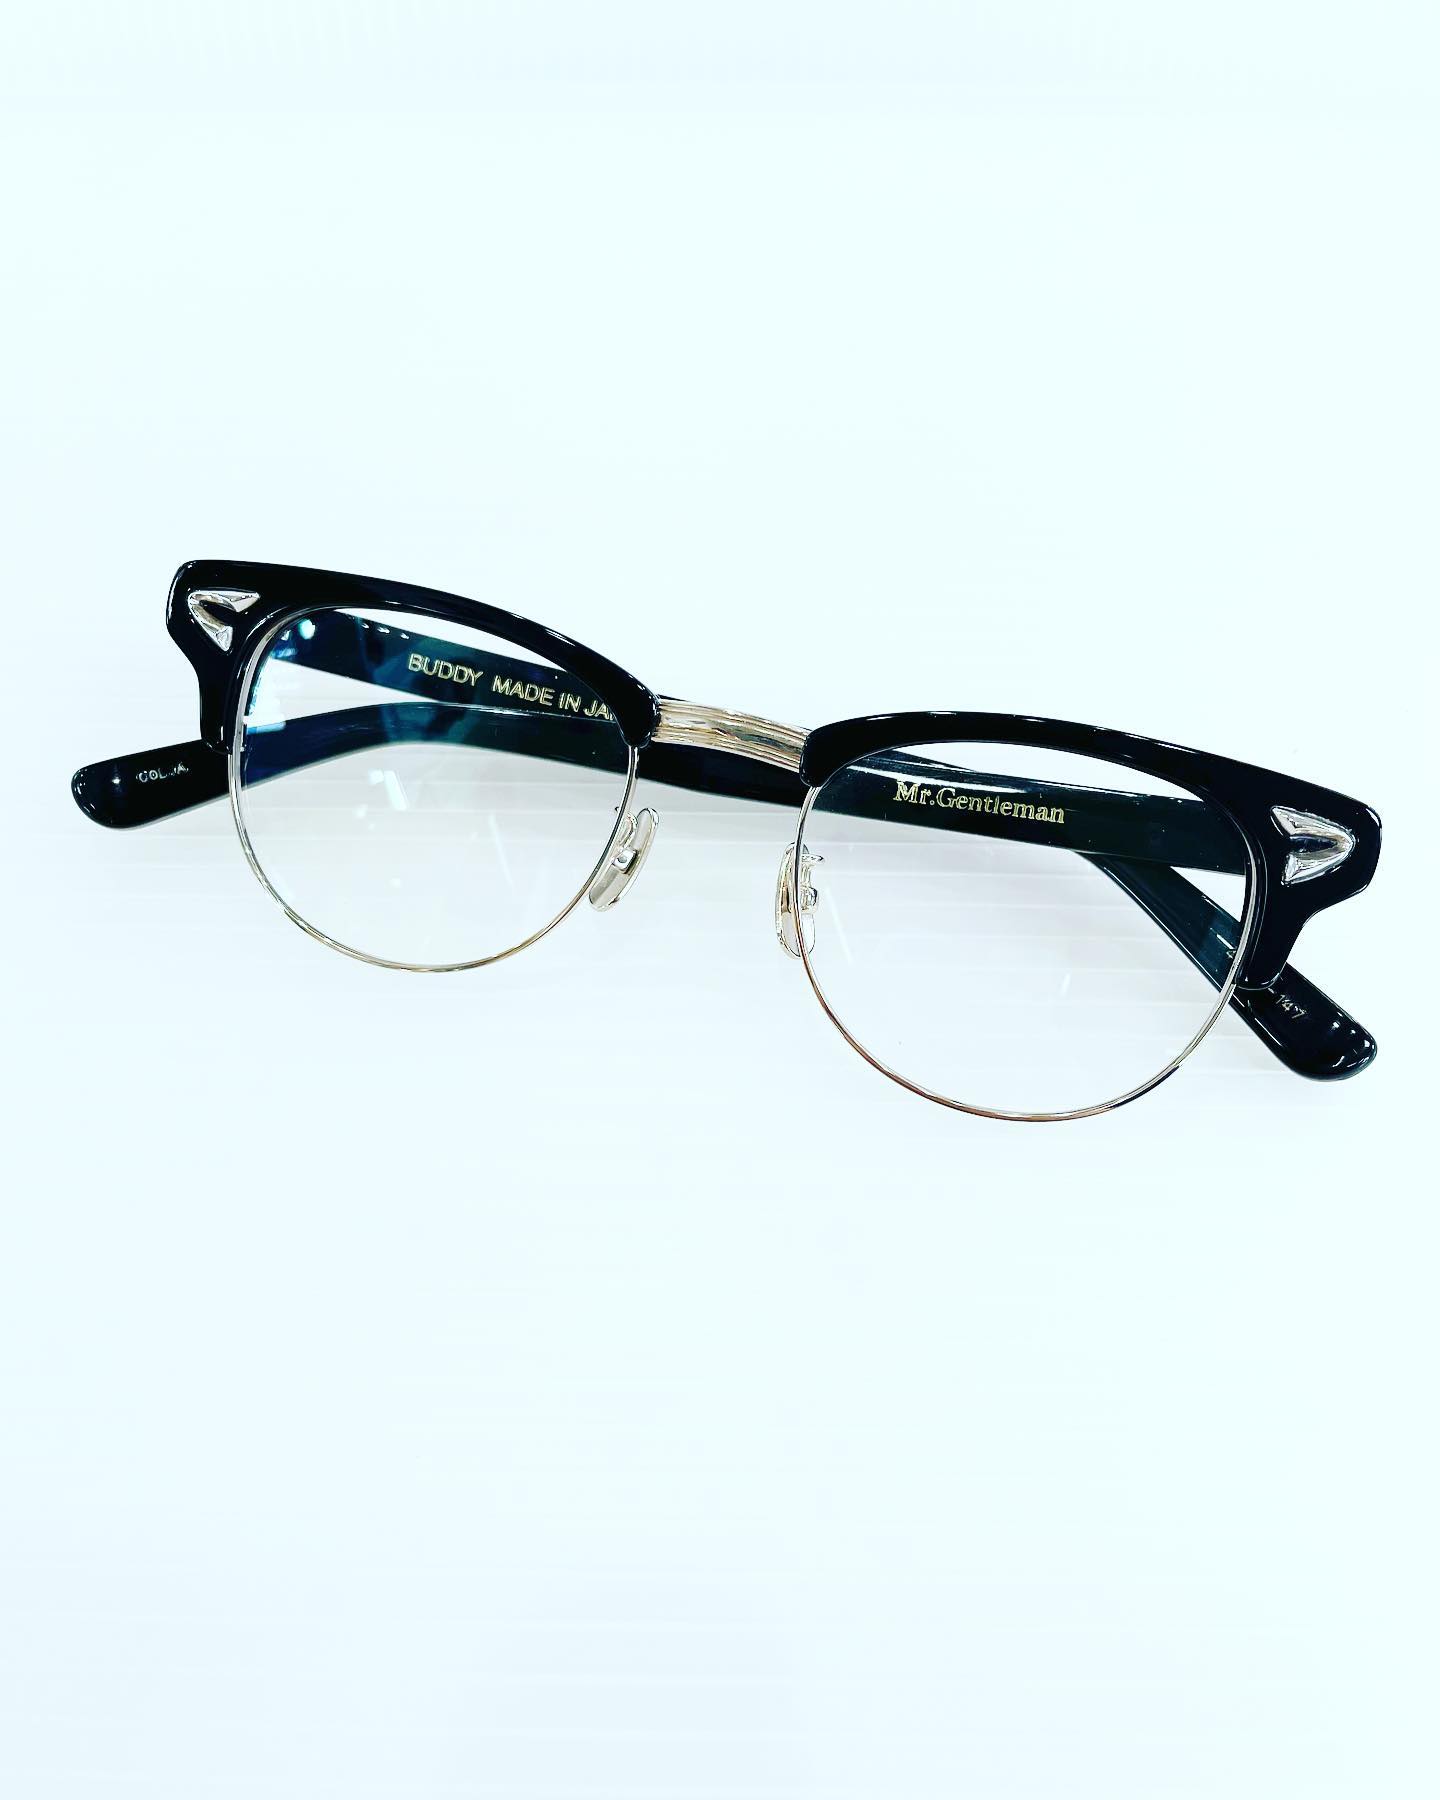 Mr.Gentleman Eyewear、アメリカントラディッショナルのようで英国紳士的のようでもある魅力的な眼鏡「BUDDY」 : 都城中